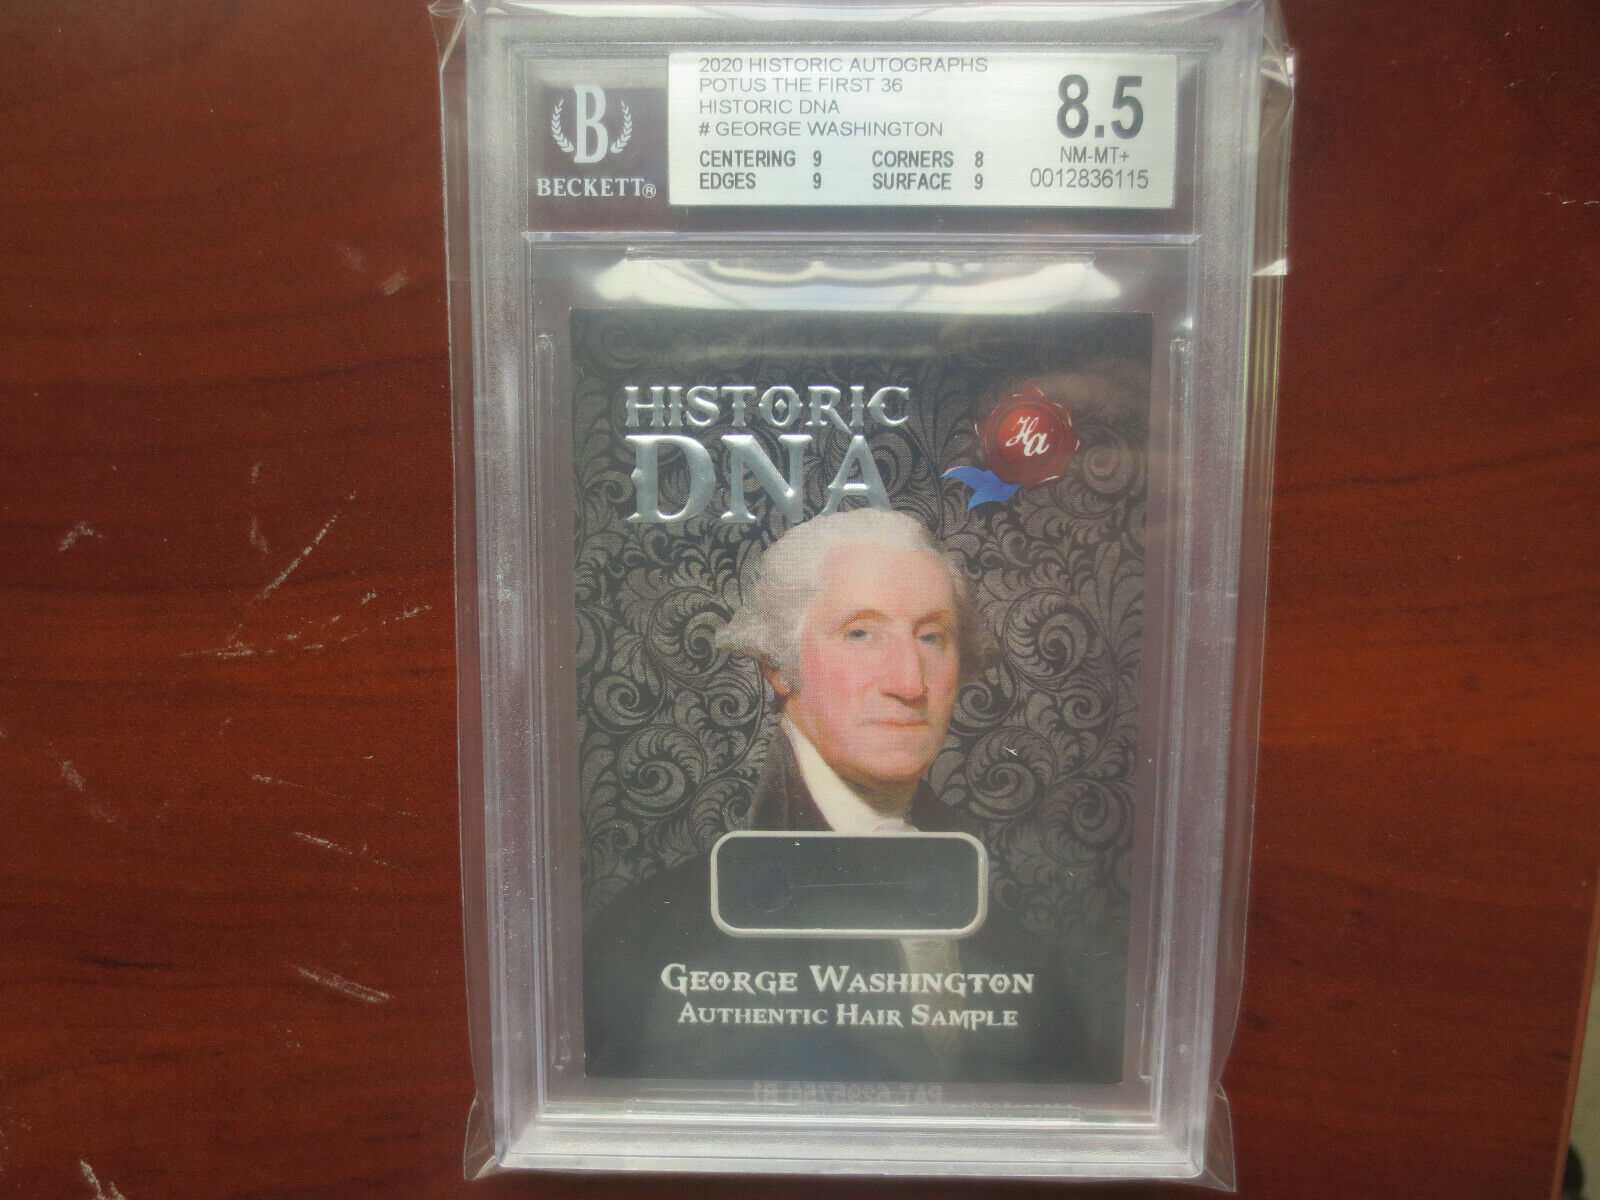 President George Washington 2020 Historic Autographs POTUS DNA Hair Card BGS 8.5